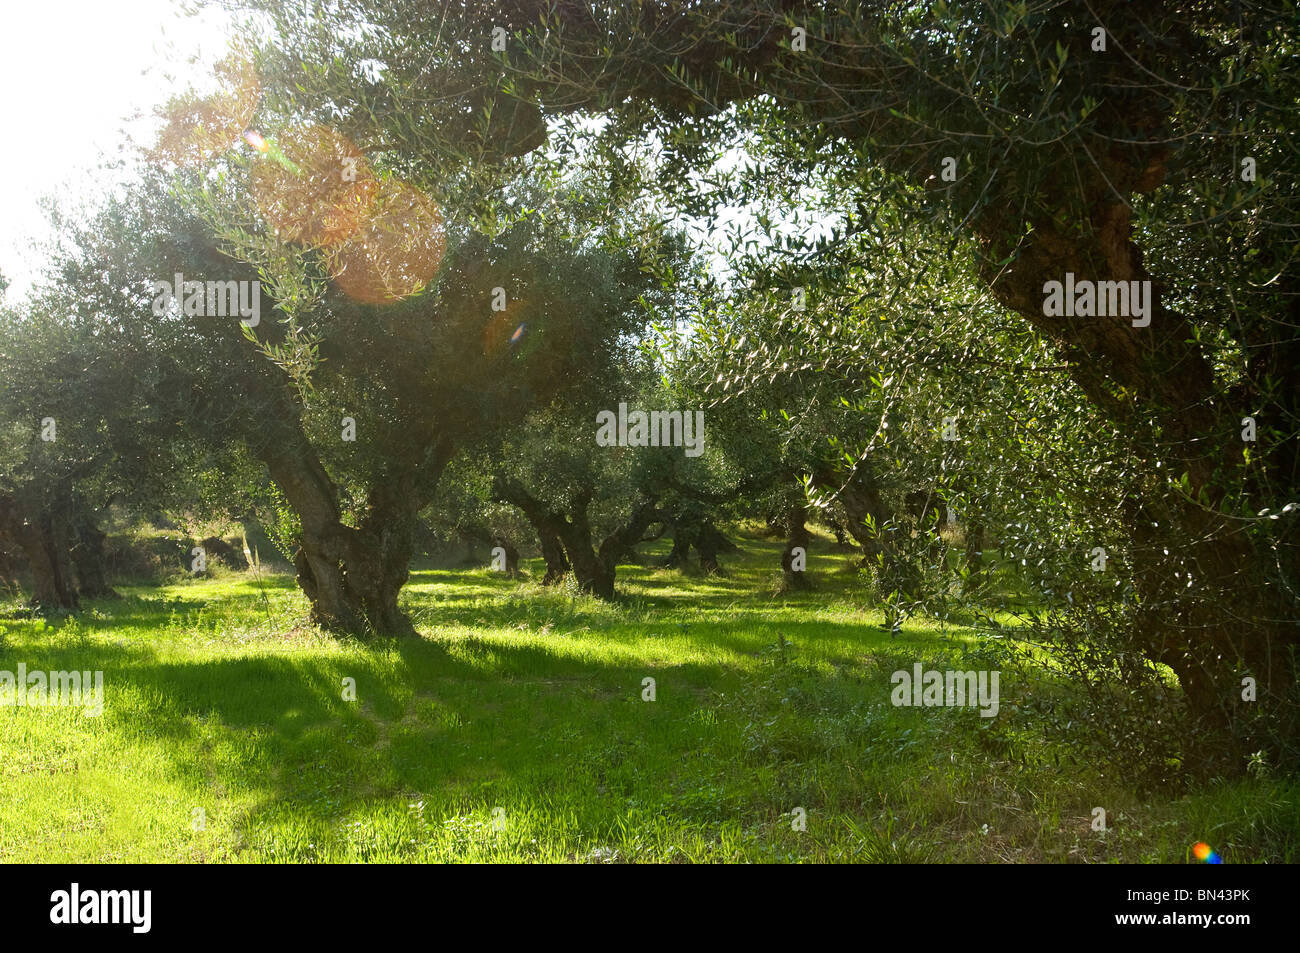 Olivos de olivar, Zakynthos, Islas Jónicas, Grecia Foto de stock